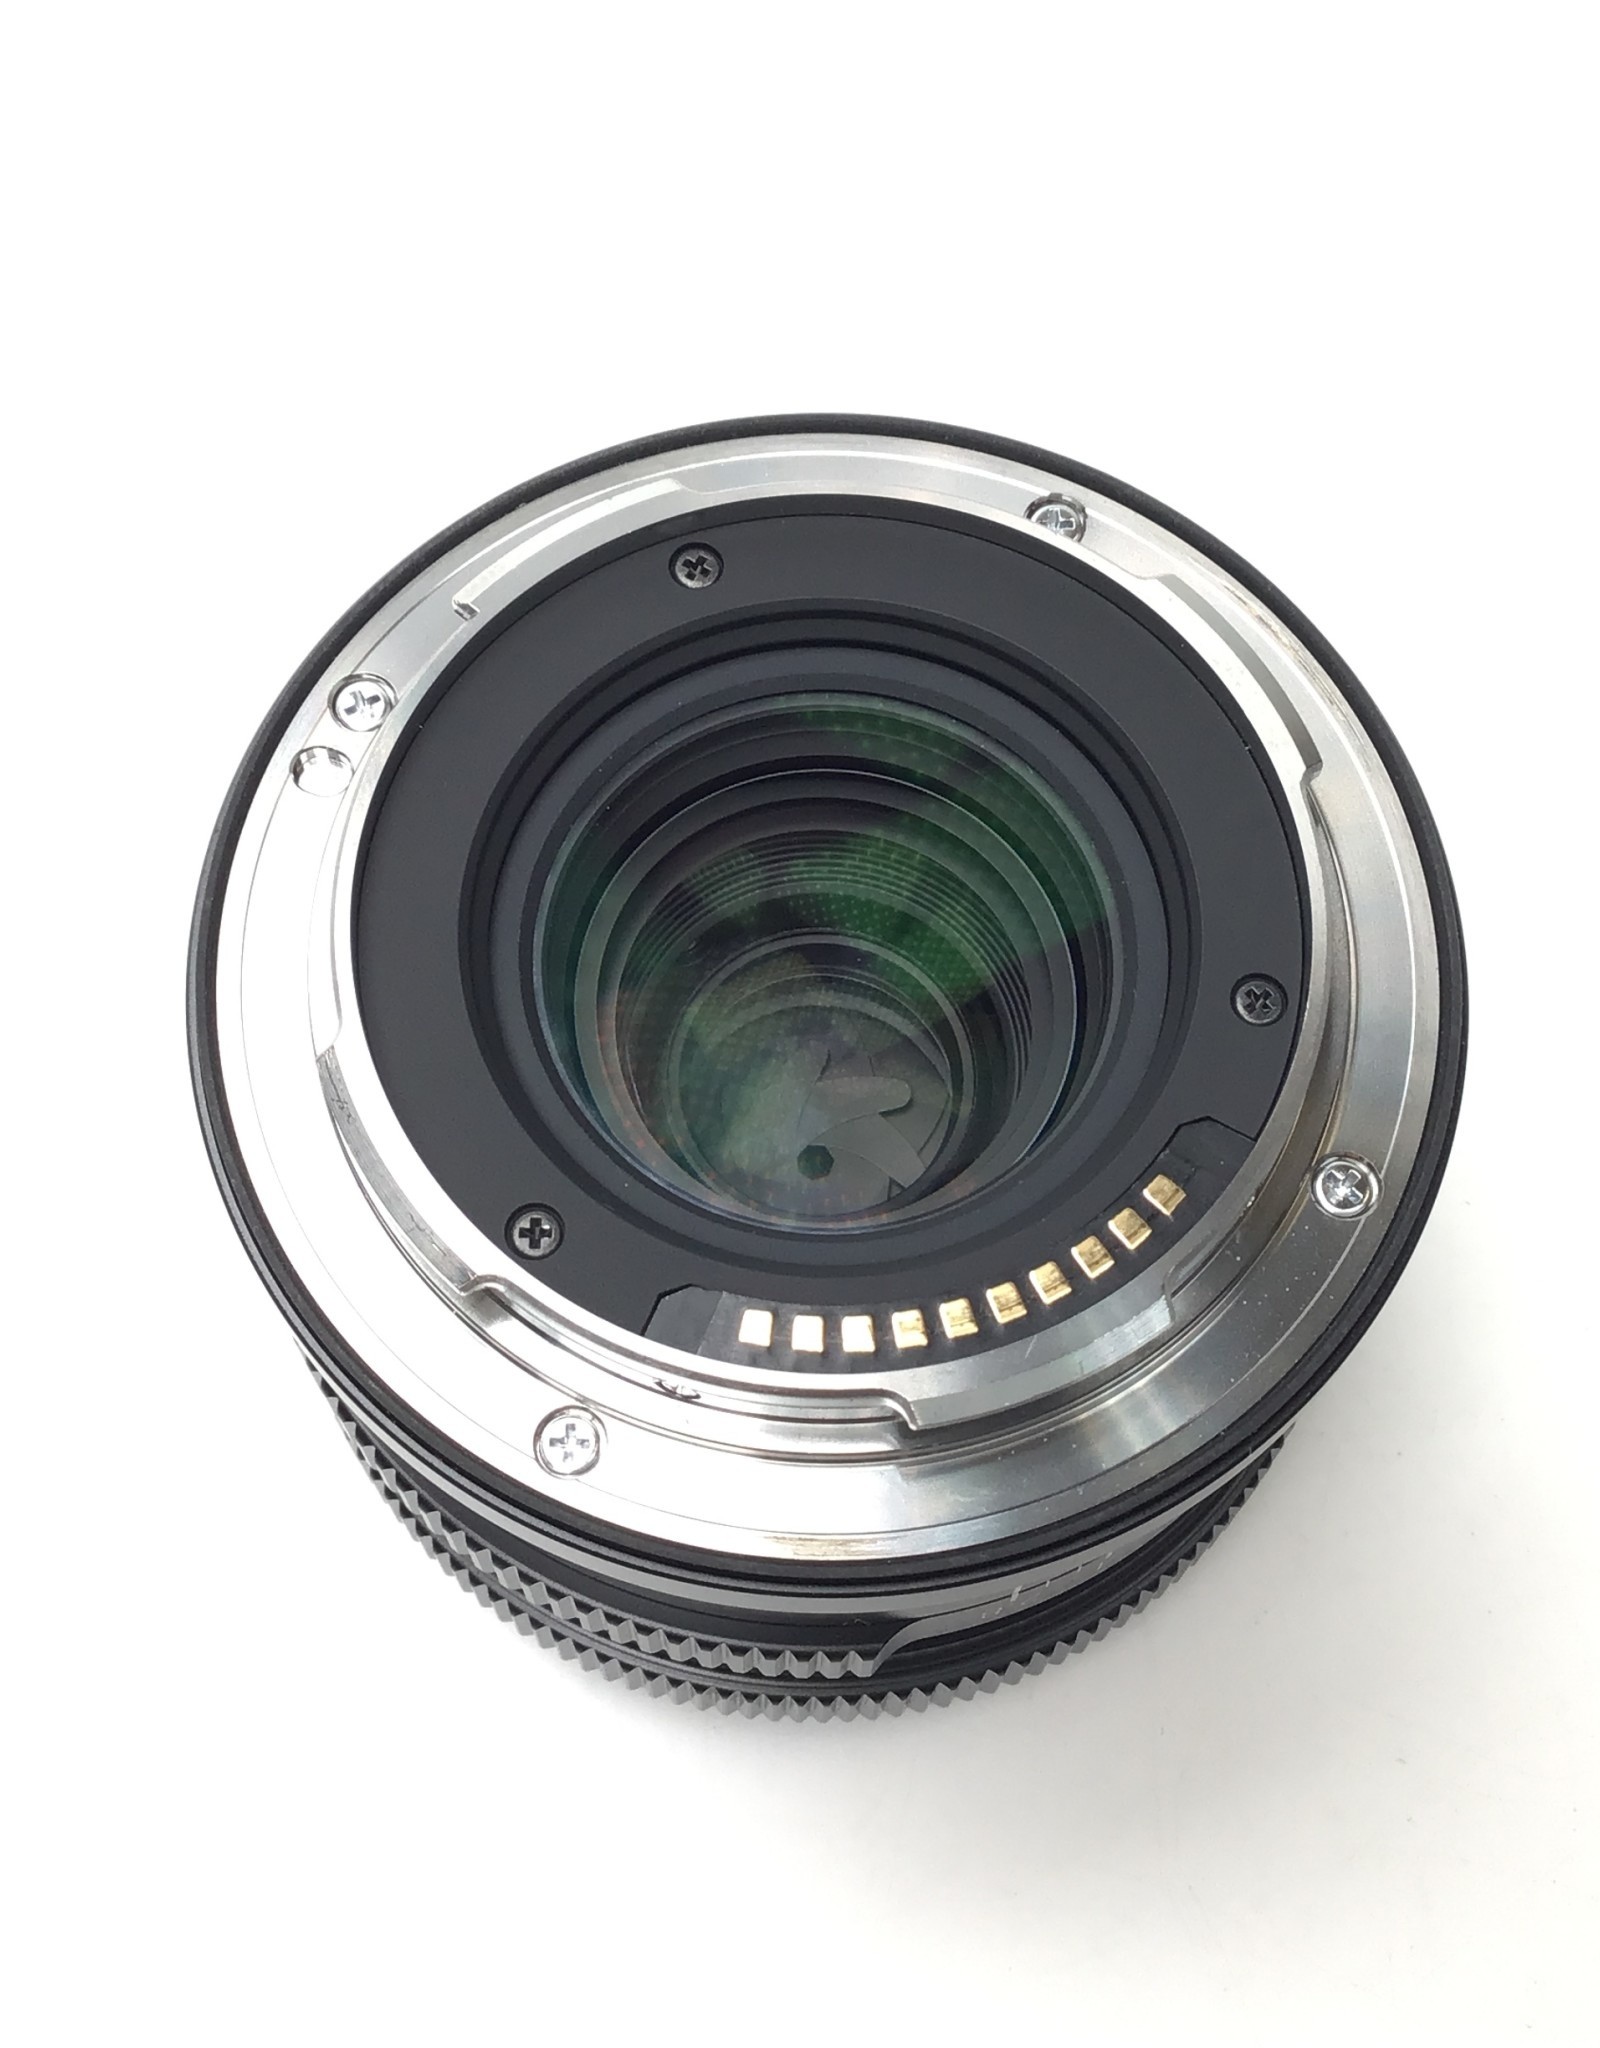 SIGMA Sigma 45mm f2.8 DG DN L Mount Lens Used EX